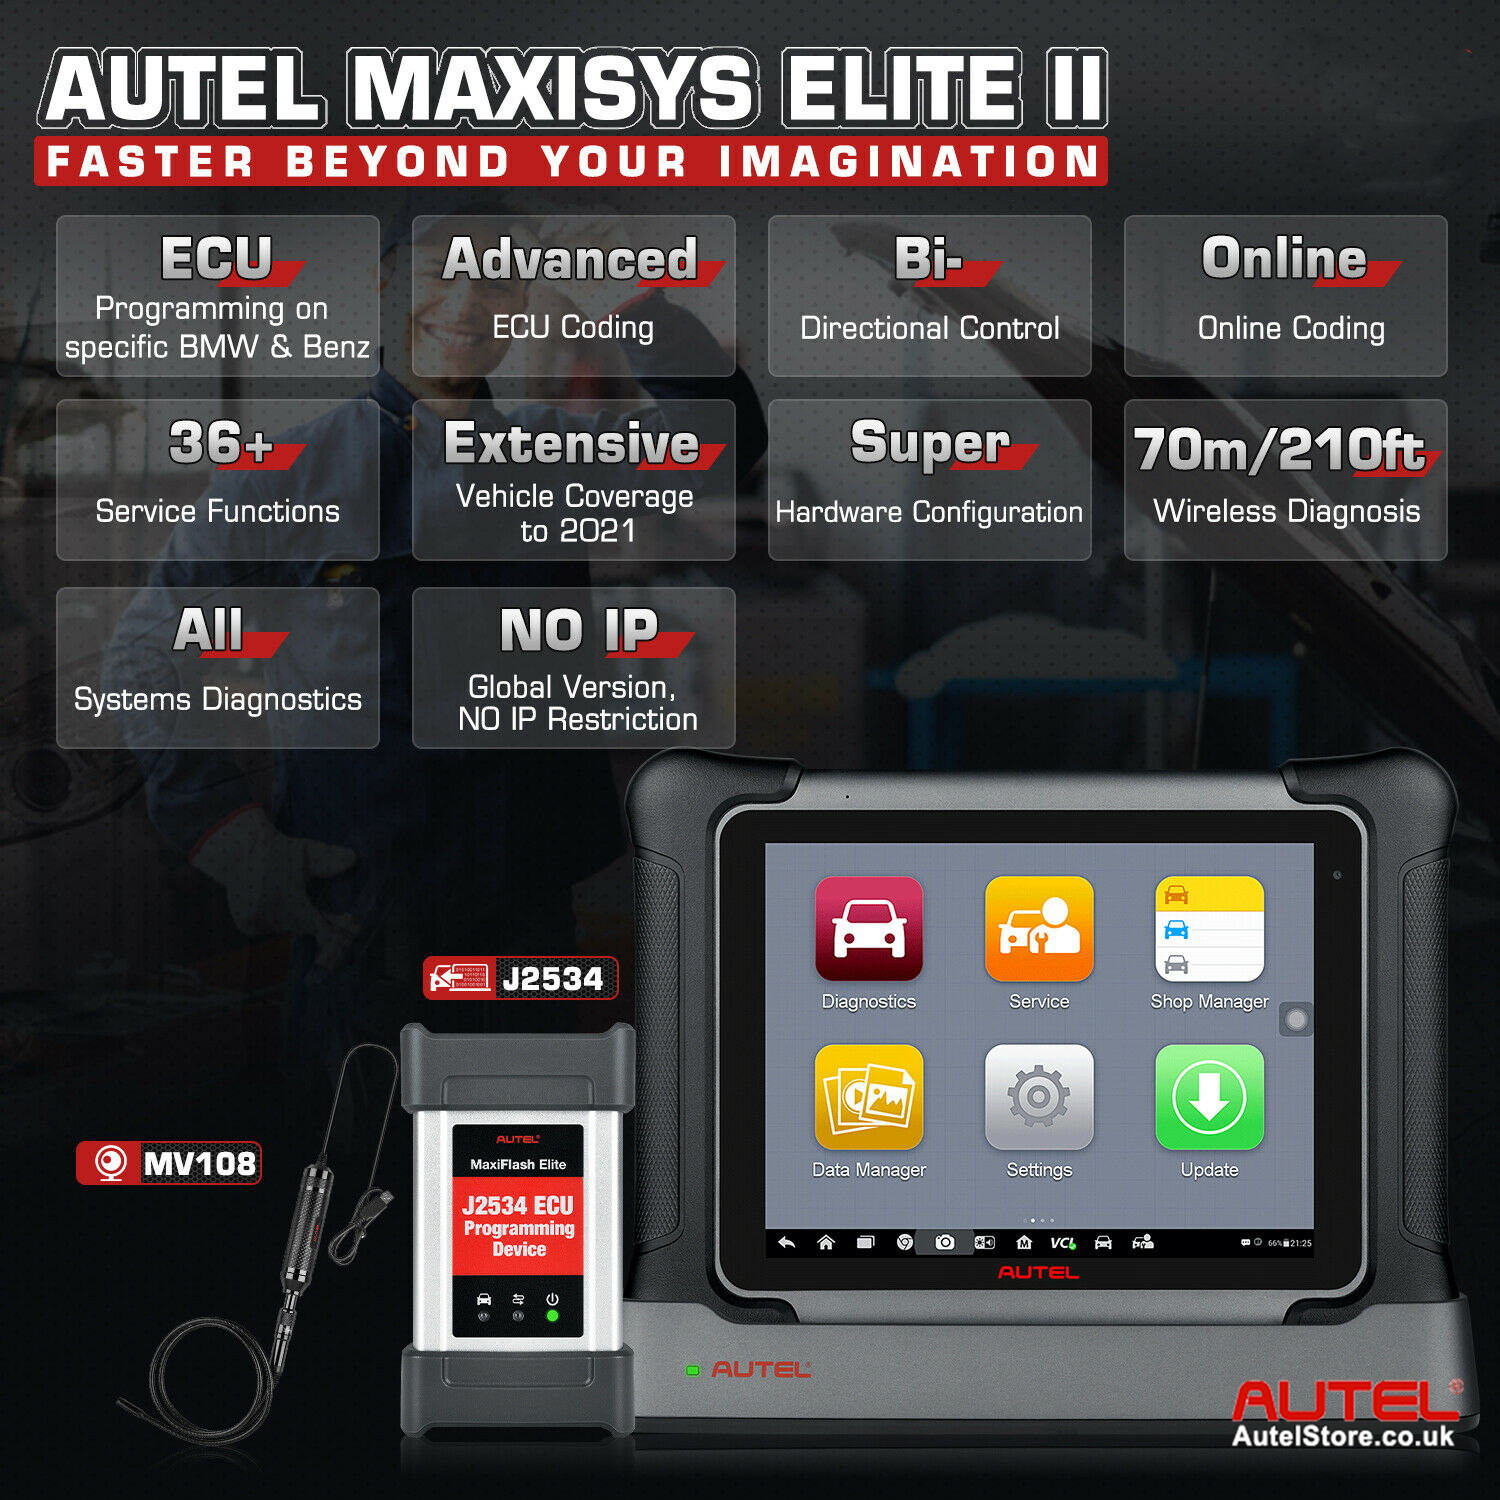 Autel Maxisys Elite II